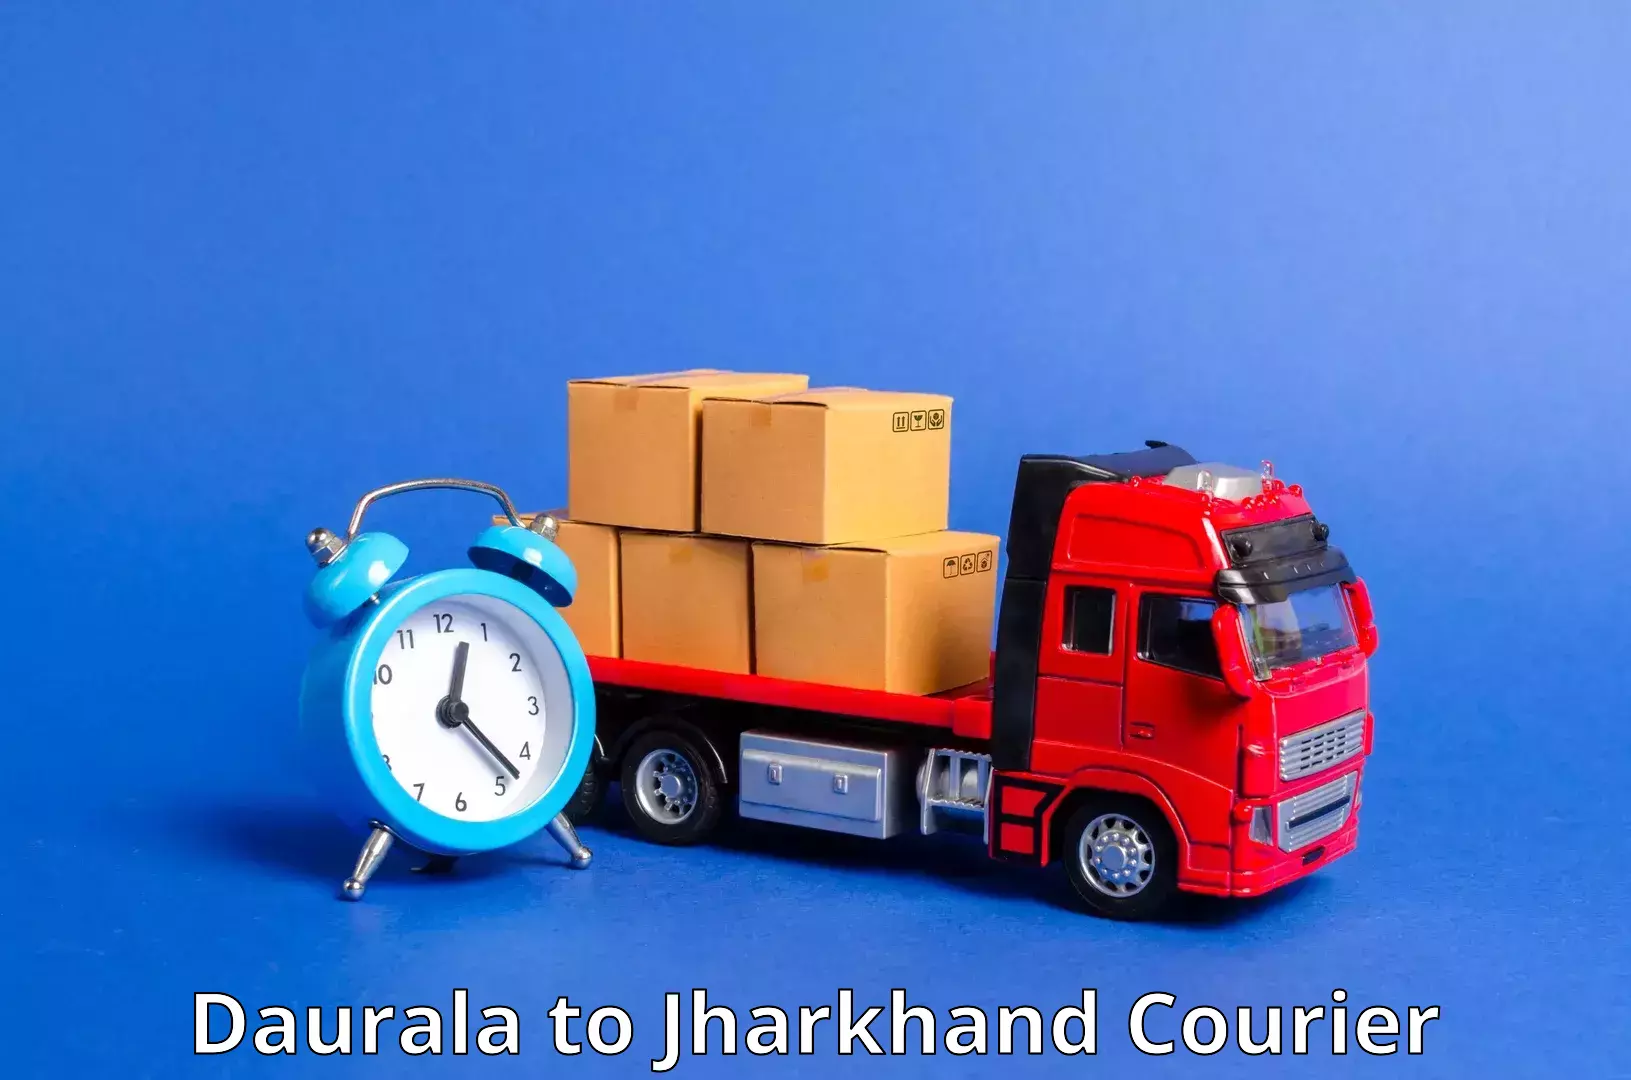 Secure packaging Daurala to Ranchi